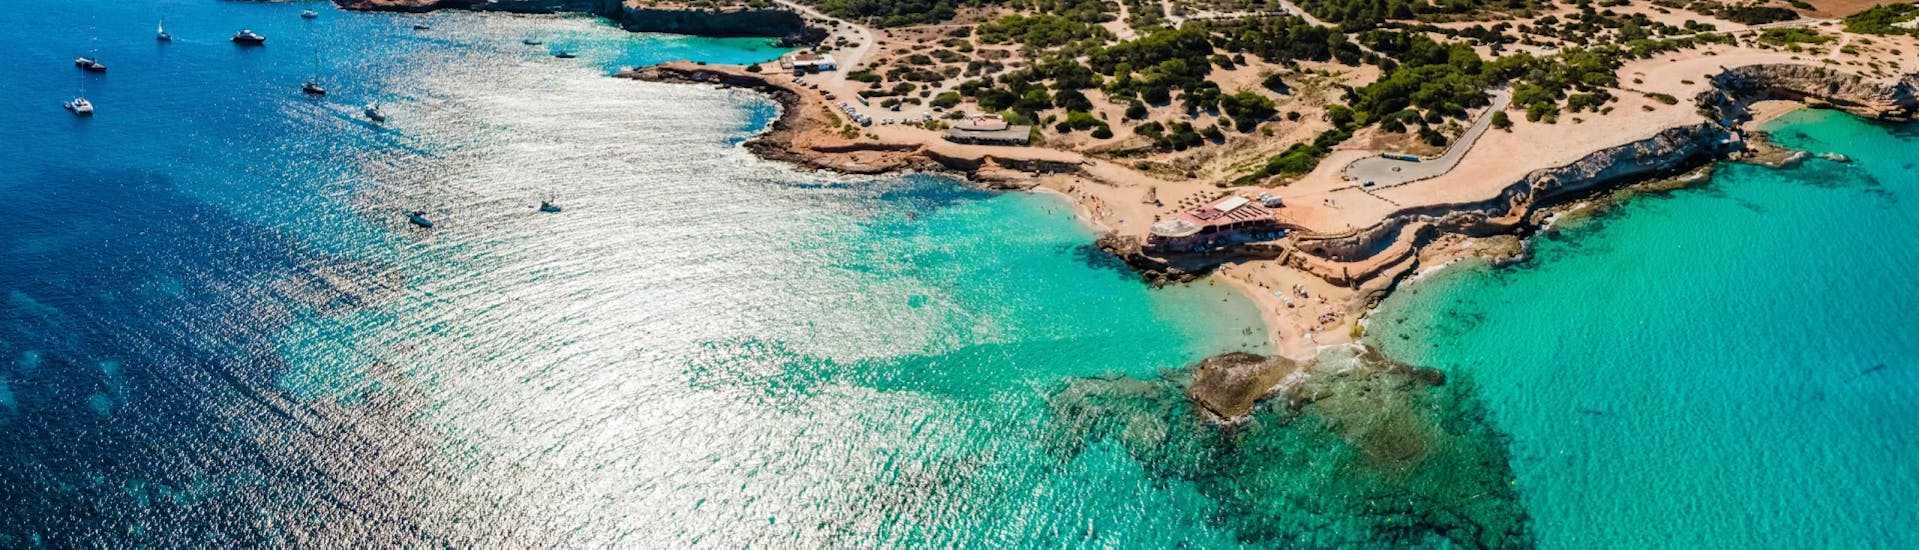 Paisaje de la costa de Ibiza durante Sunset Boat Trip in Ibiza with Snorkeling and Open Bar by Arenal Diving & Boat Trips Ibiza.